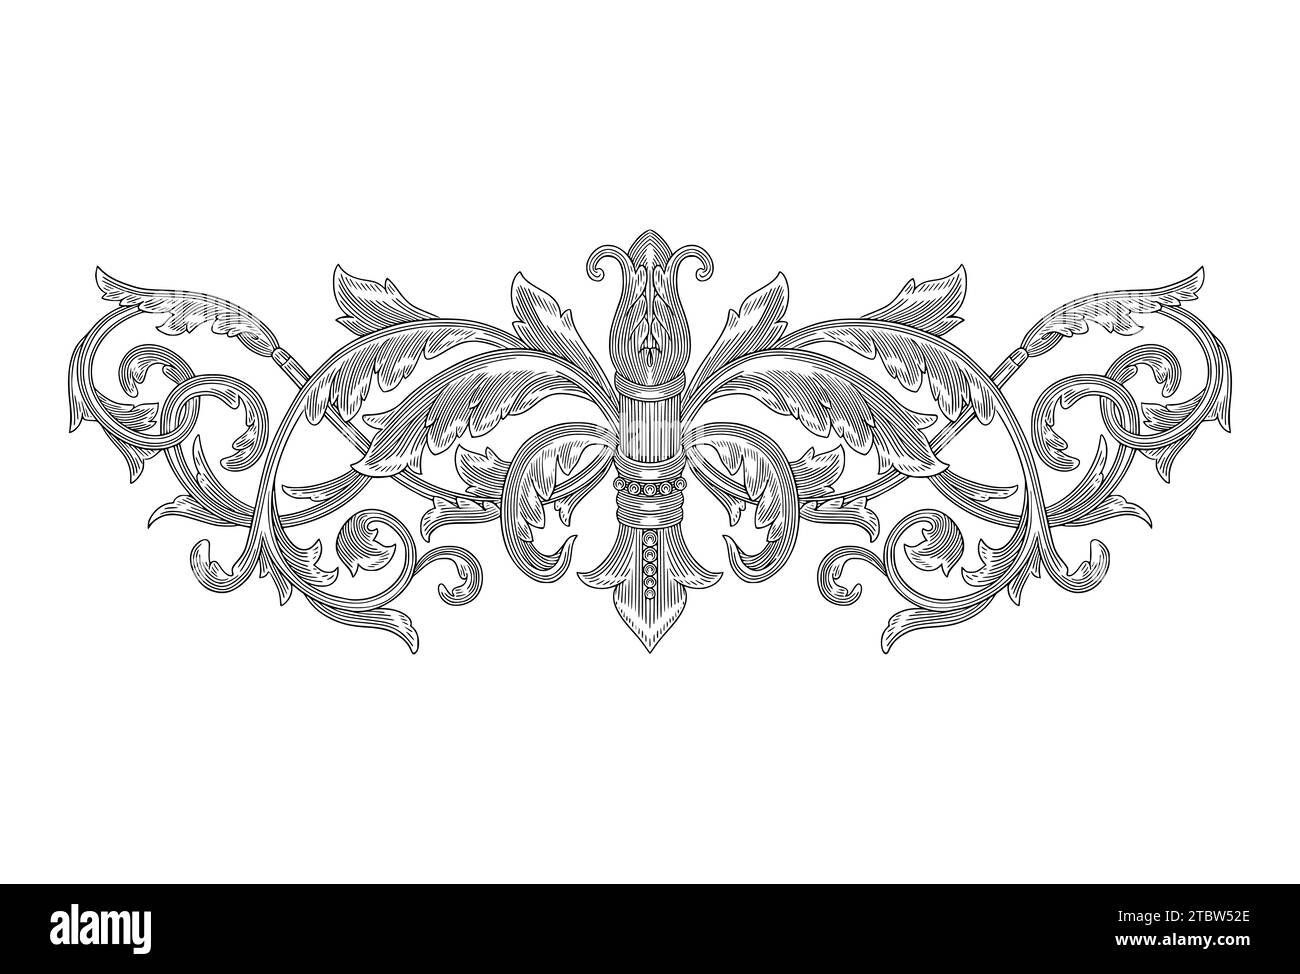 Fleur de lis with vintage baroque ornament floral frame, antique engraving drawing illustration Stock Vector